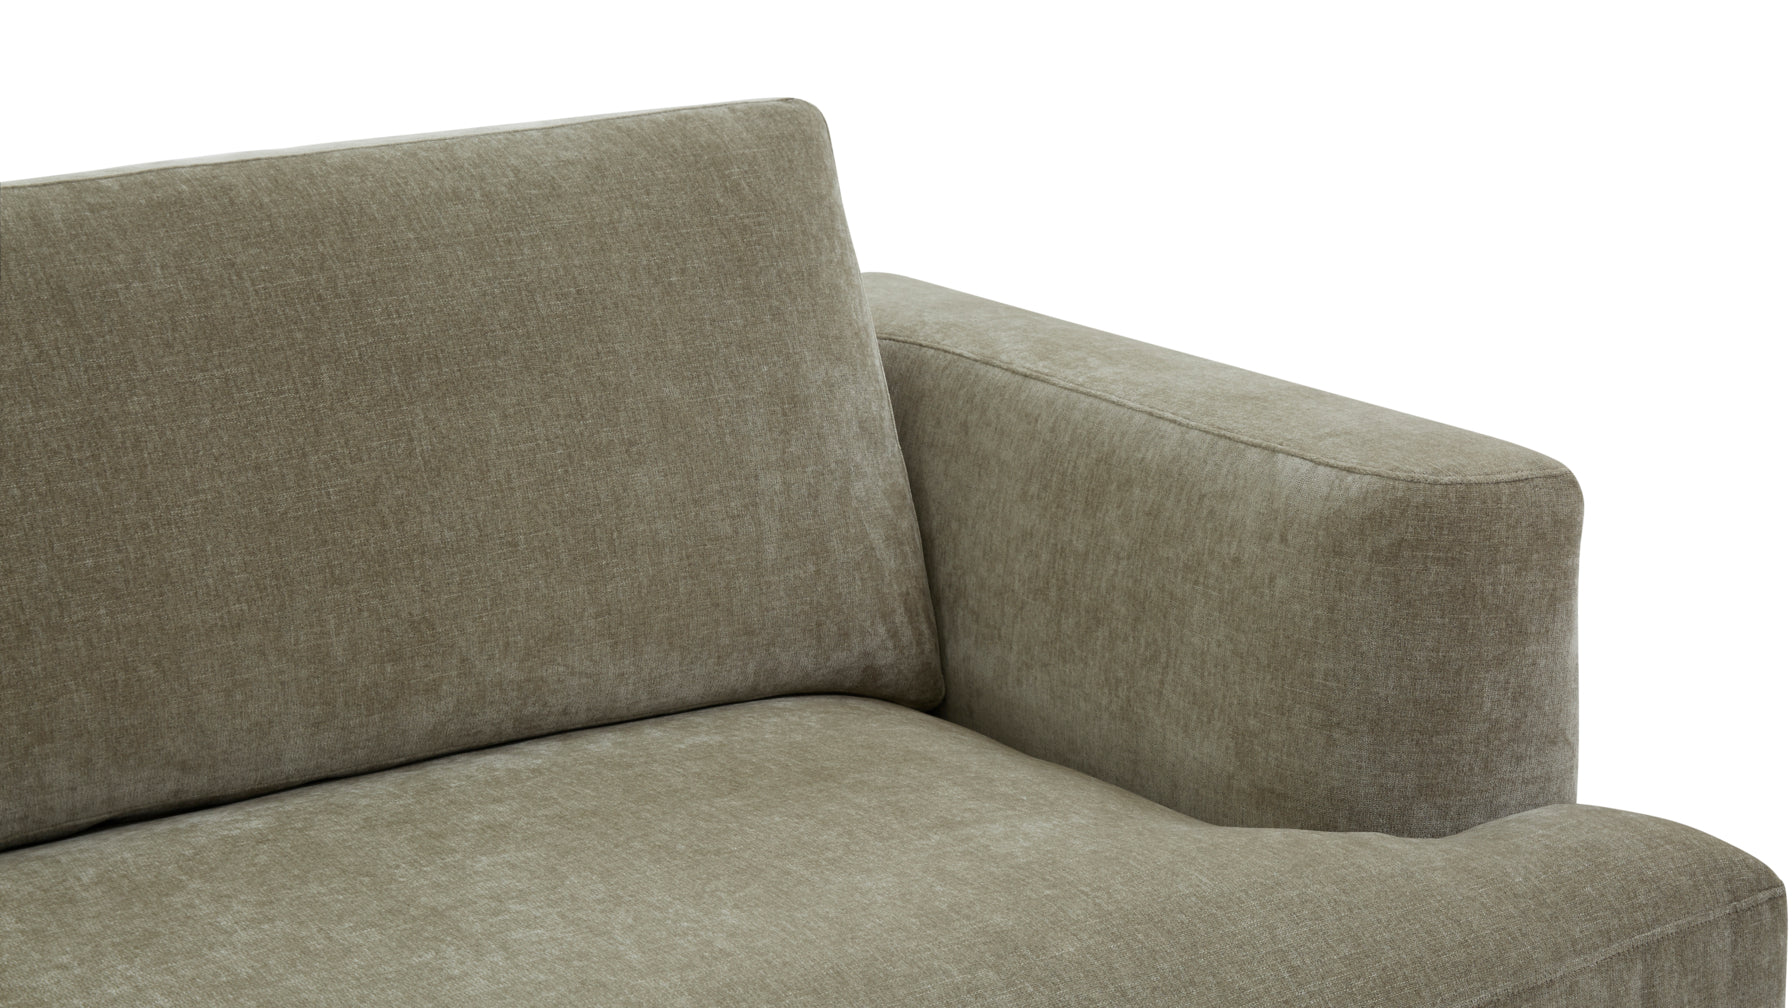 Good Company Sofa, 3 Seater, Artichoke - Image 6